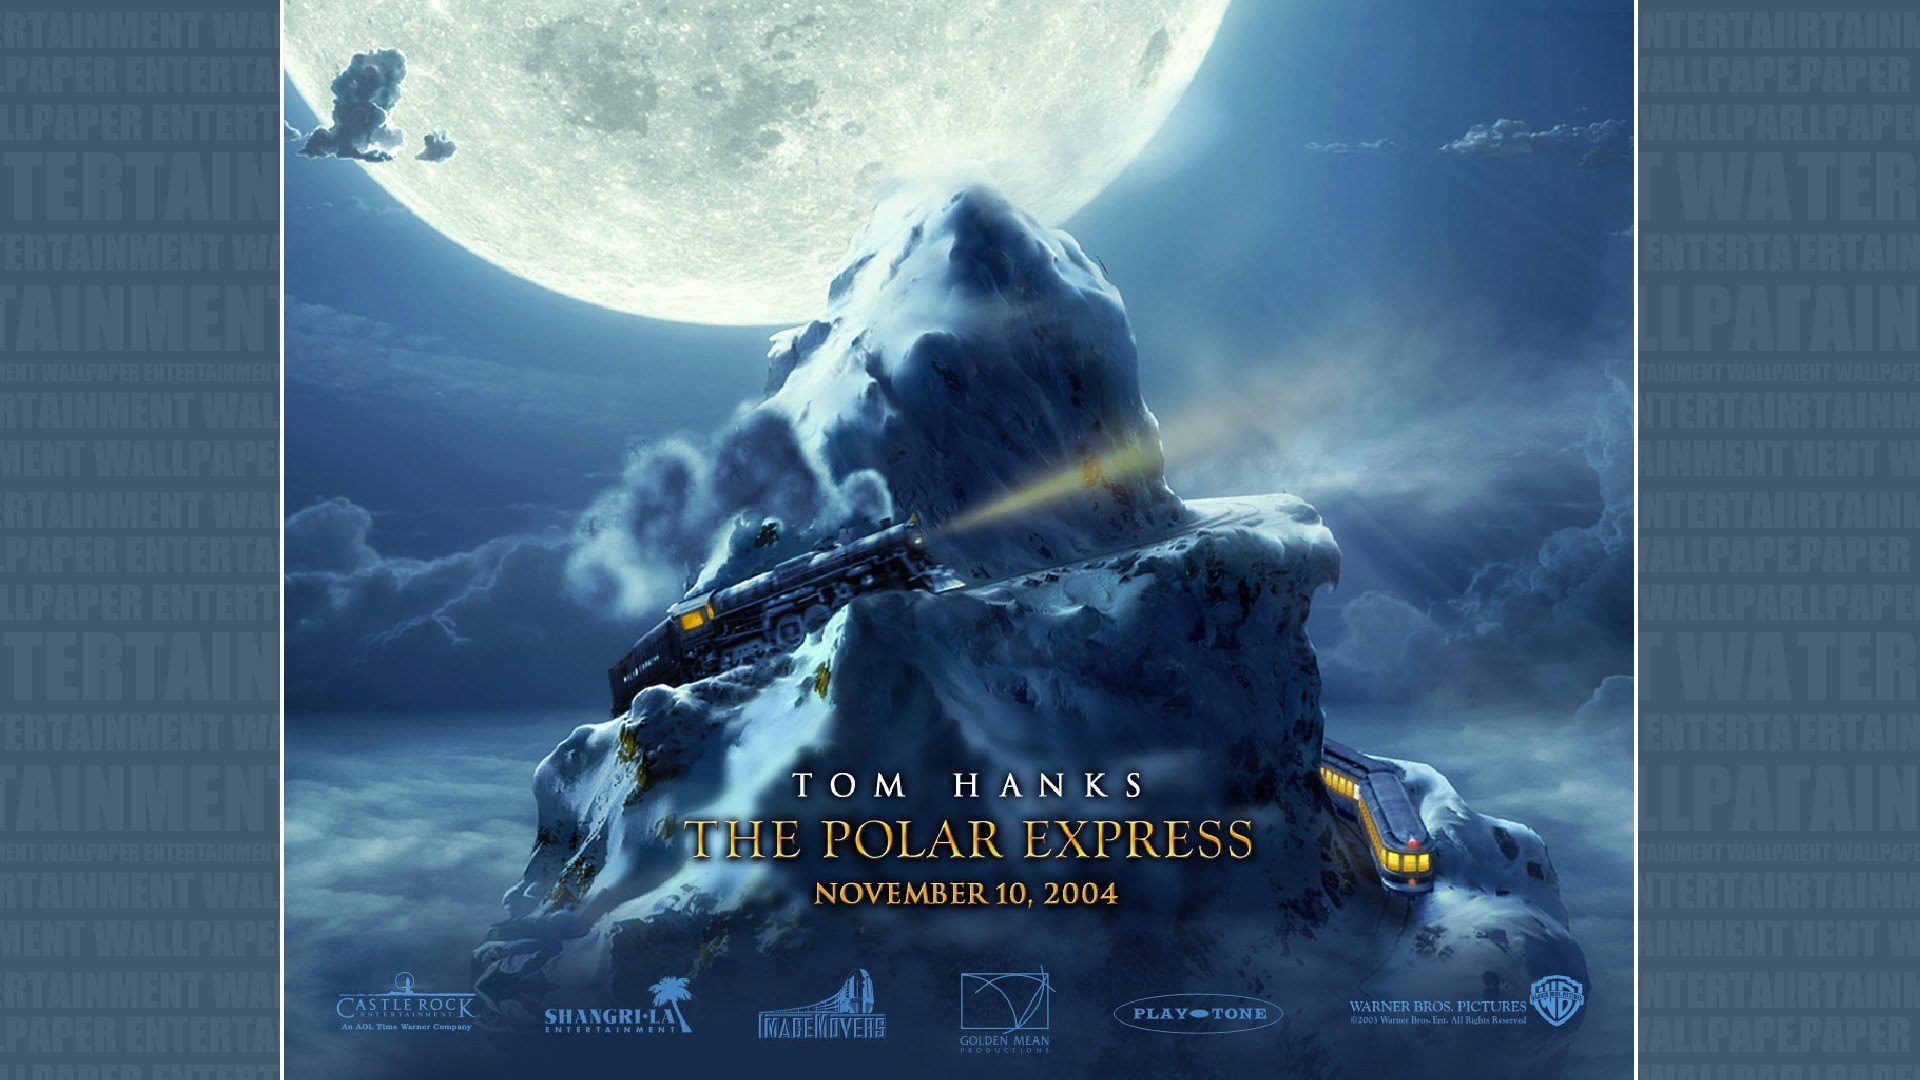 1920x1080 The Polar Express Wallpaper - Original size, download now.